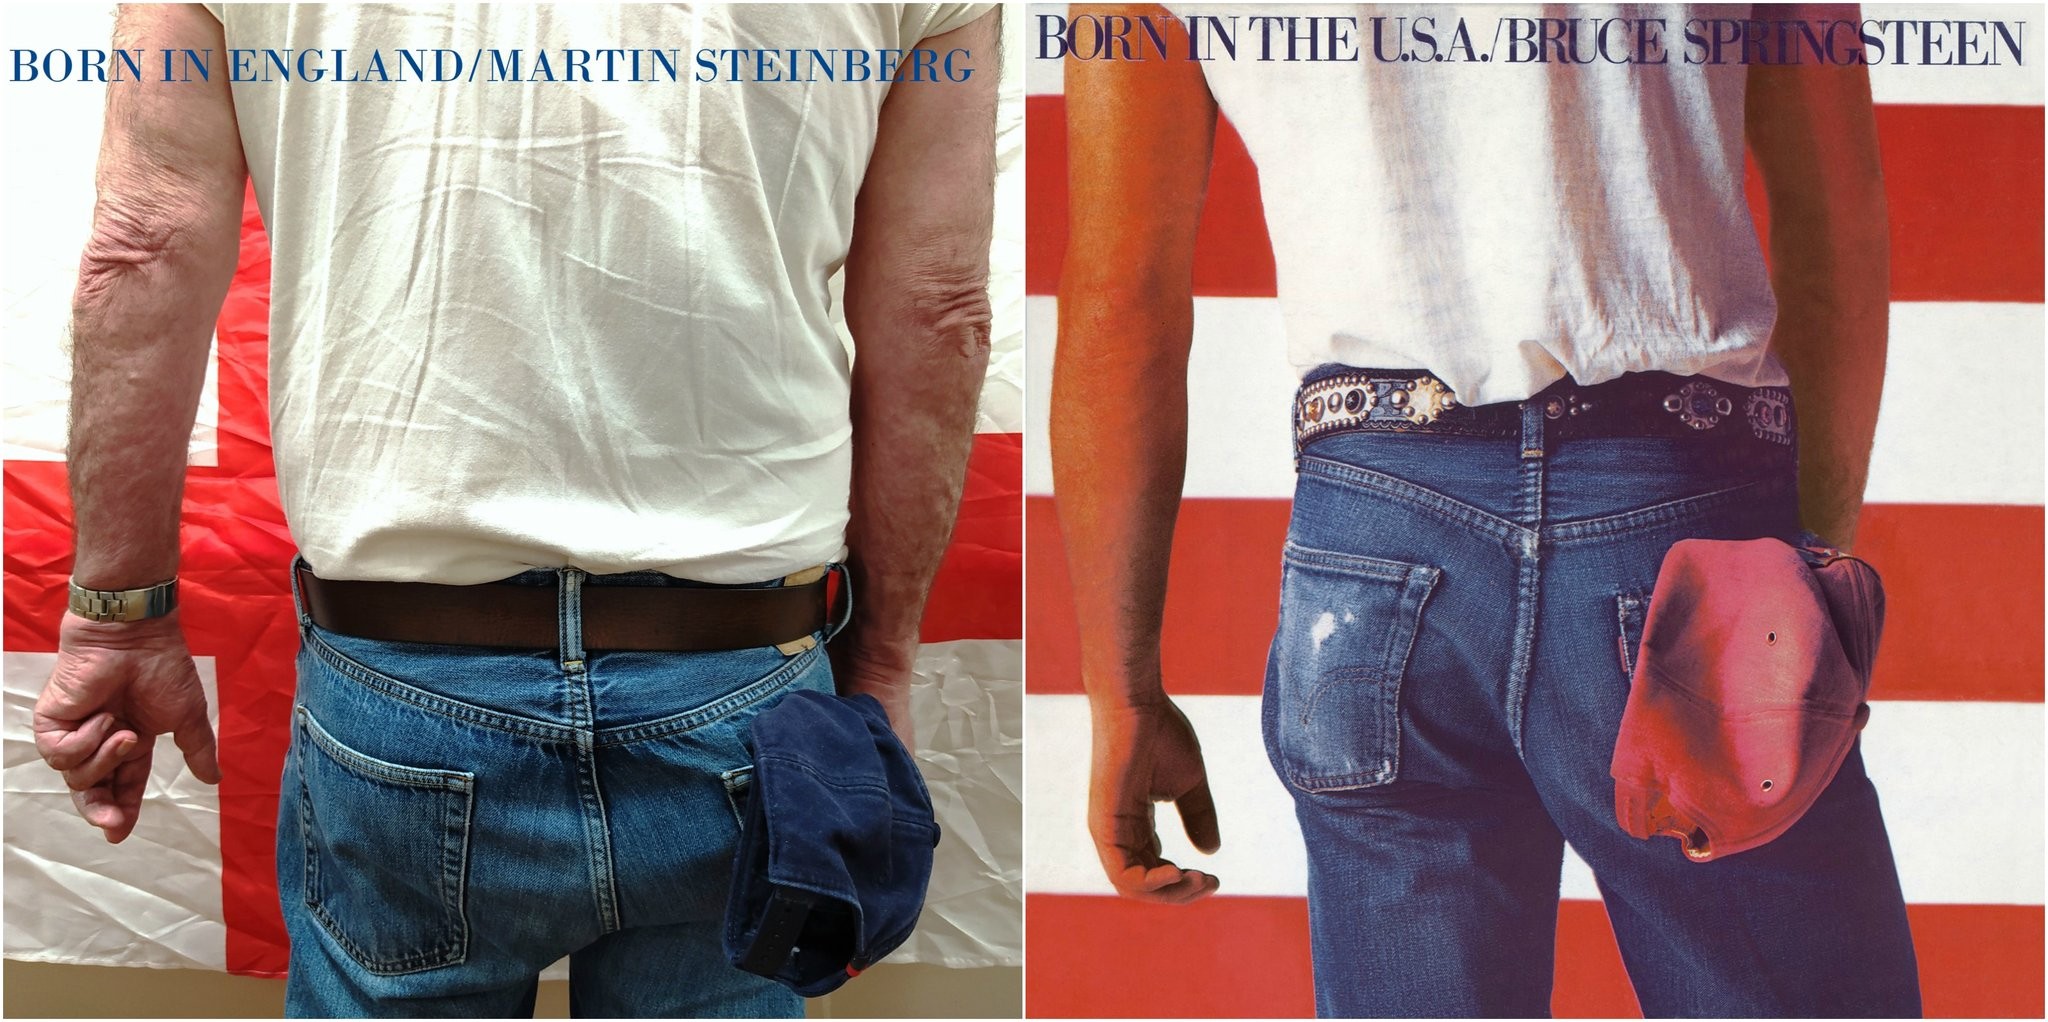 Recriação de álbum de Bruce Springsteen (Foto: @robertspeker / Twitter)